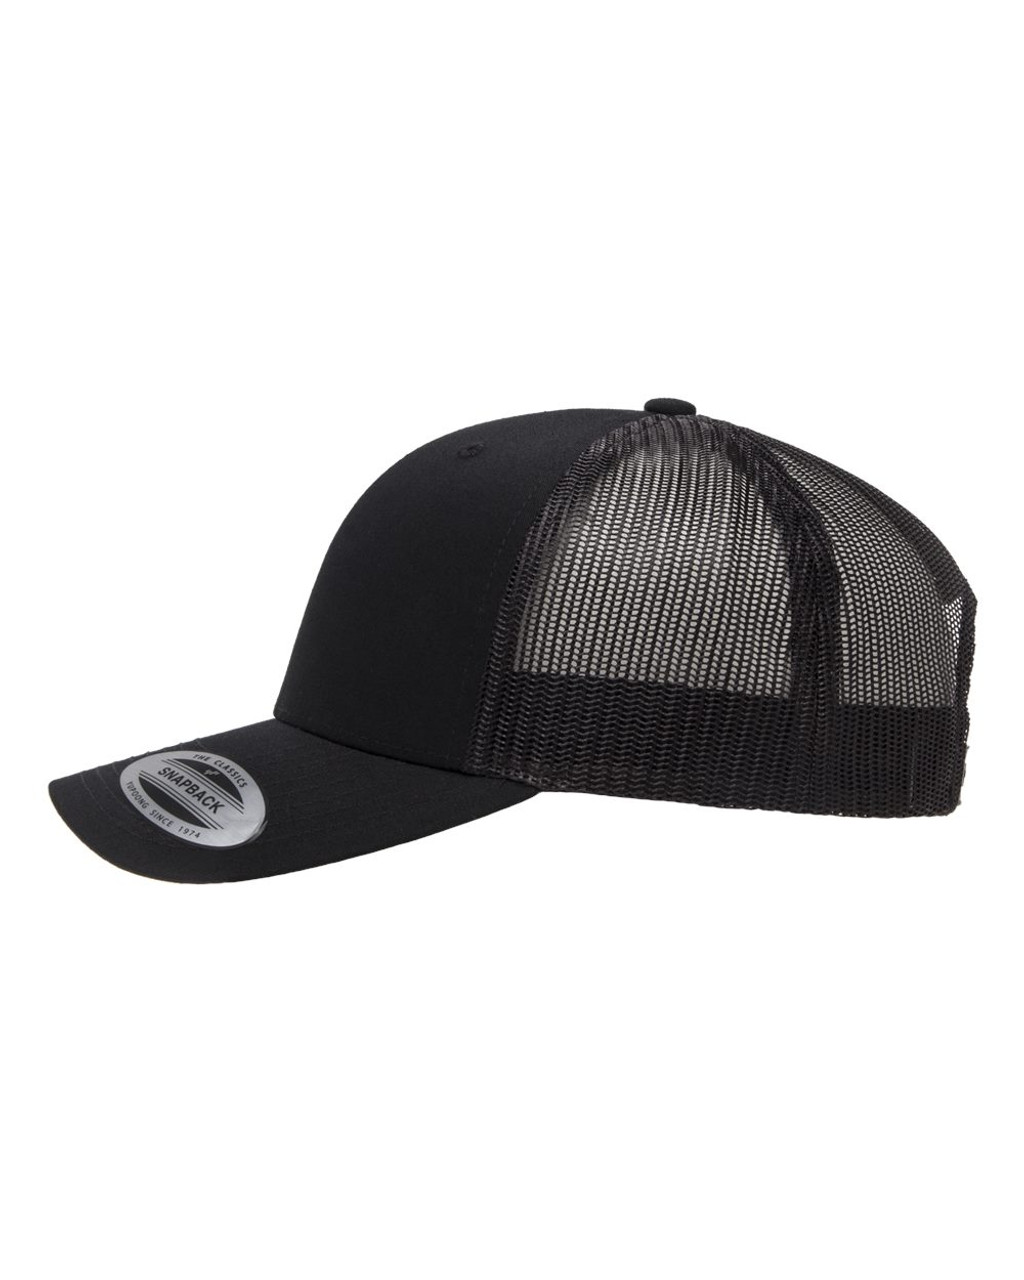 Dimebag Original Raxor Darrell Heat Pressed Black on Black Curved Bill Hat - Adult Mesh Trucker Snap Back Cap